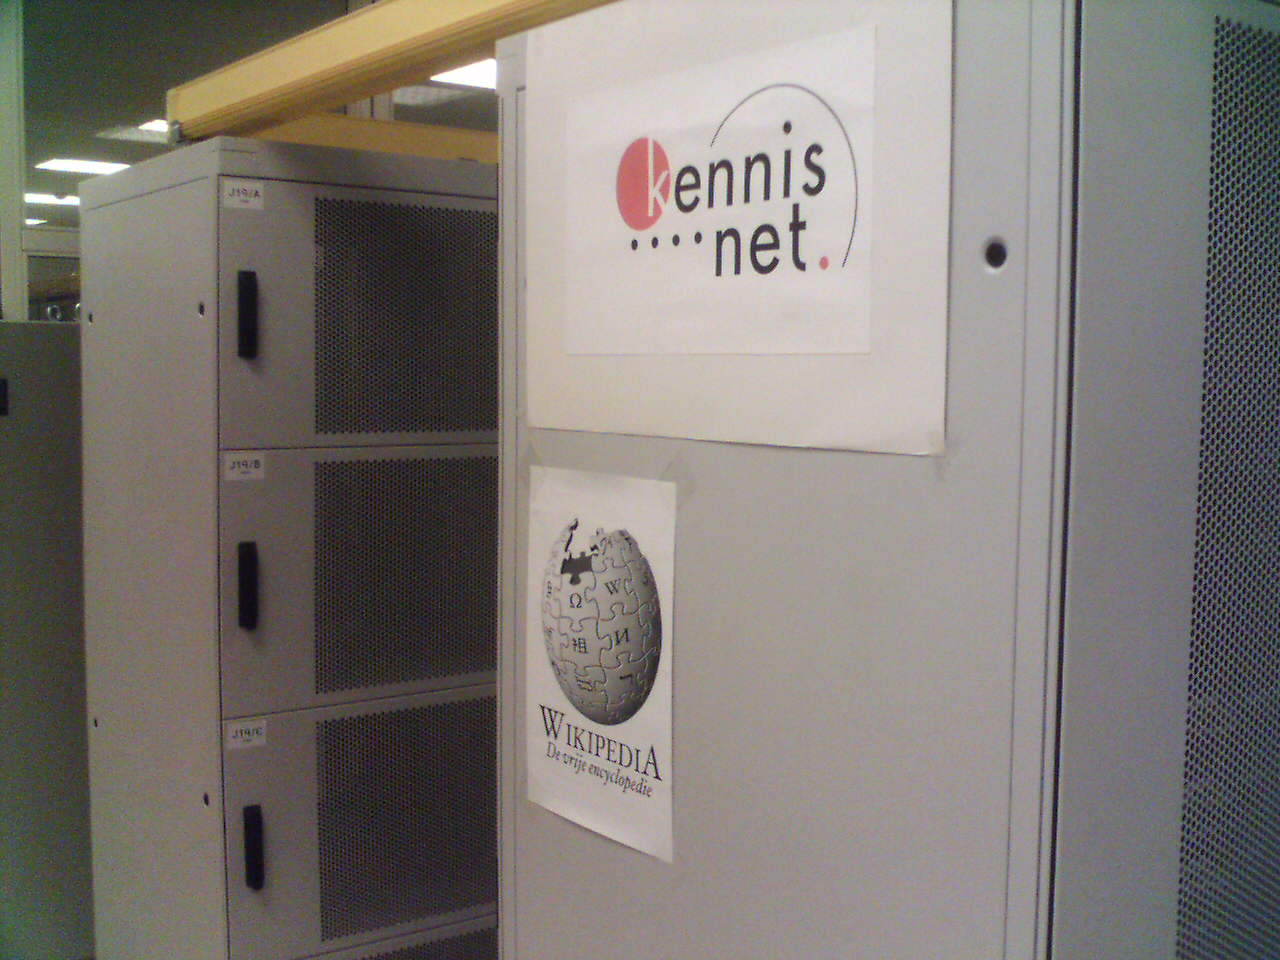 Kennisnet Wikipedia serverroom.jpg